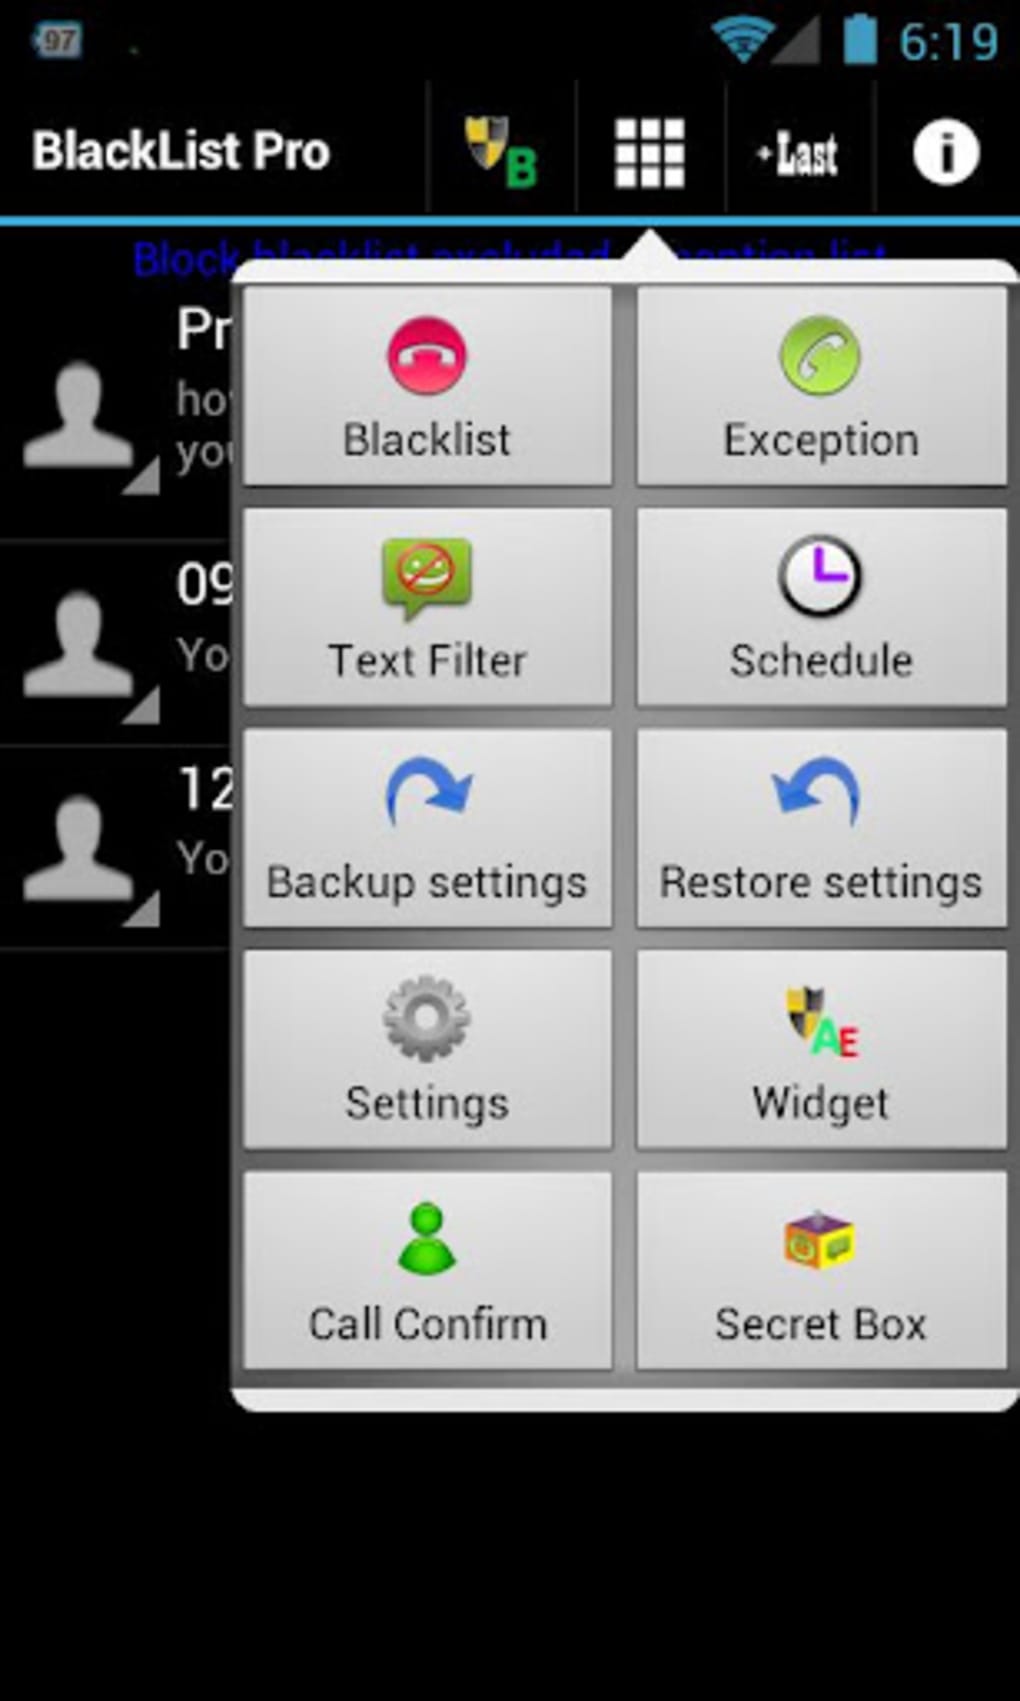 Exception txt. APK Blacklist. Phone Blacklist check Pro. White Black list приложение. Зонк Pro черный список.